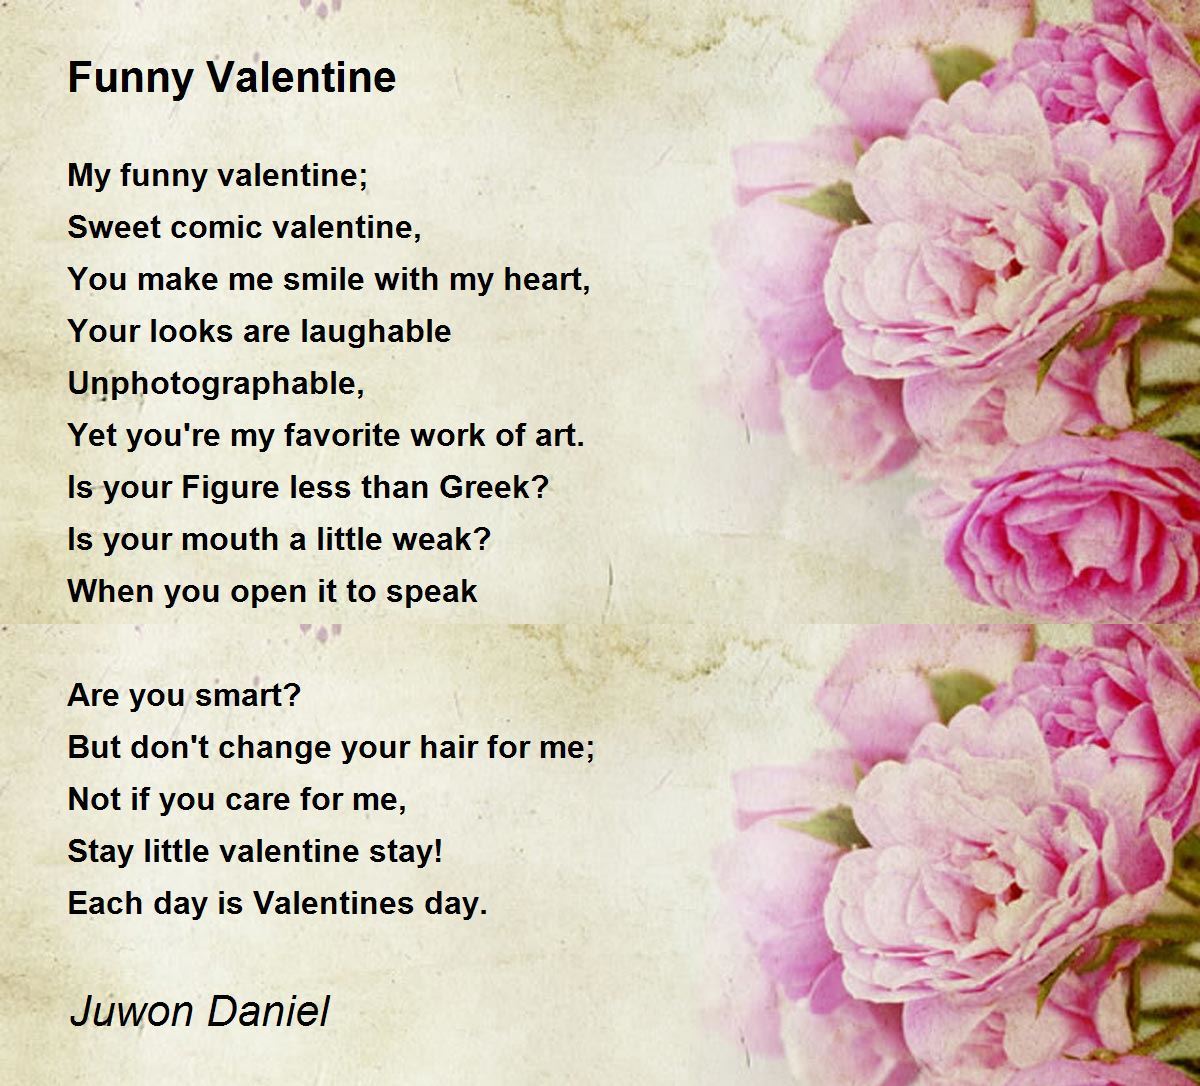 Funny Valentine - Funny Valentine Poem by Juwon Daniel